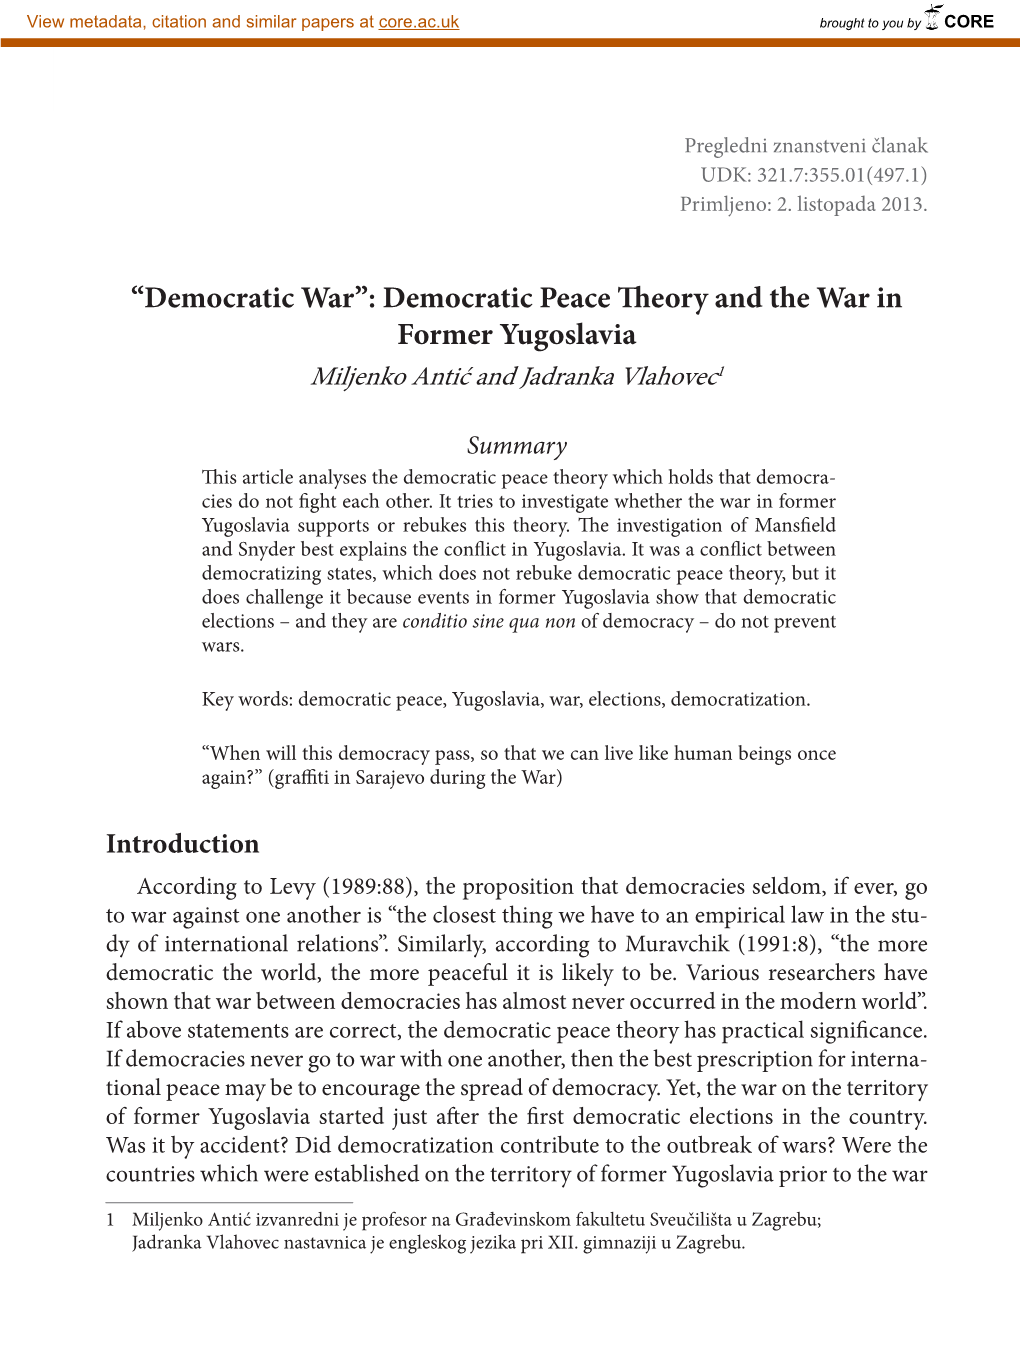 Democratic Peace Theory and the War in Former Yugoslavia Miljenko Antić and Jadranka Vlahovec1